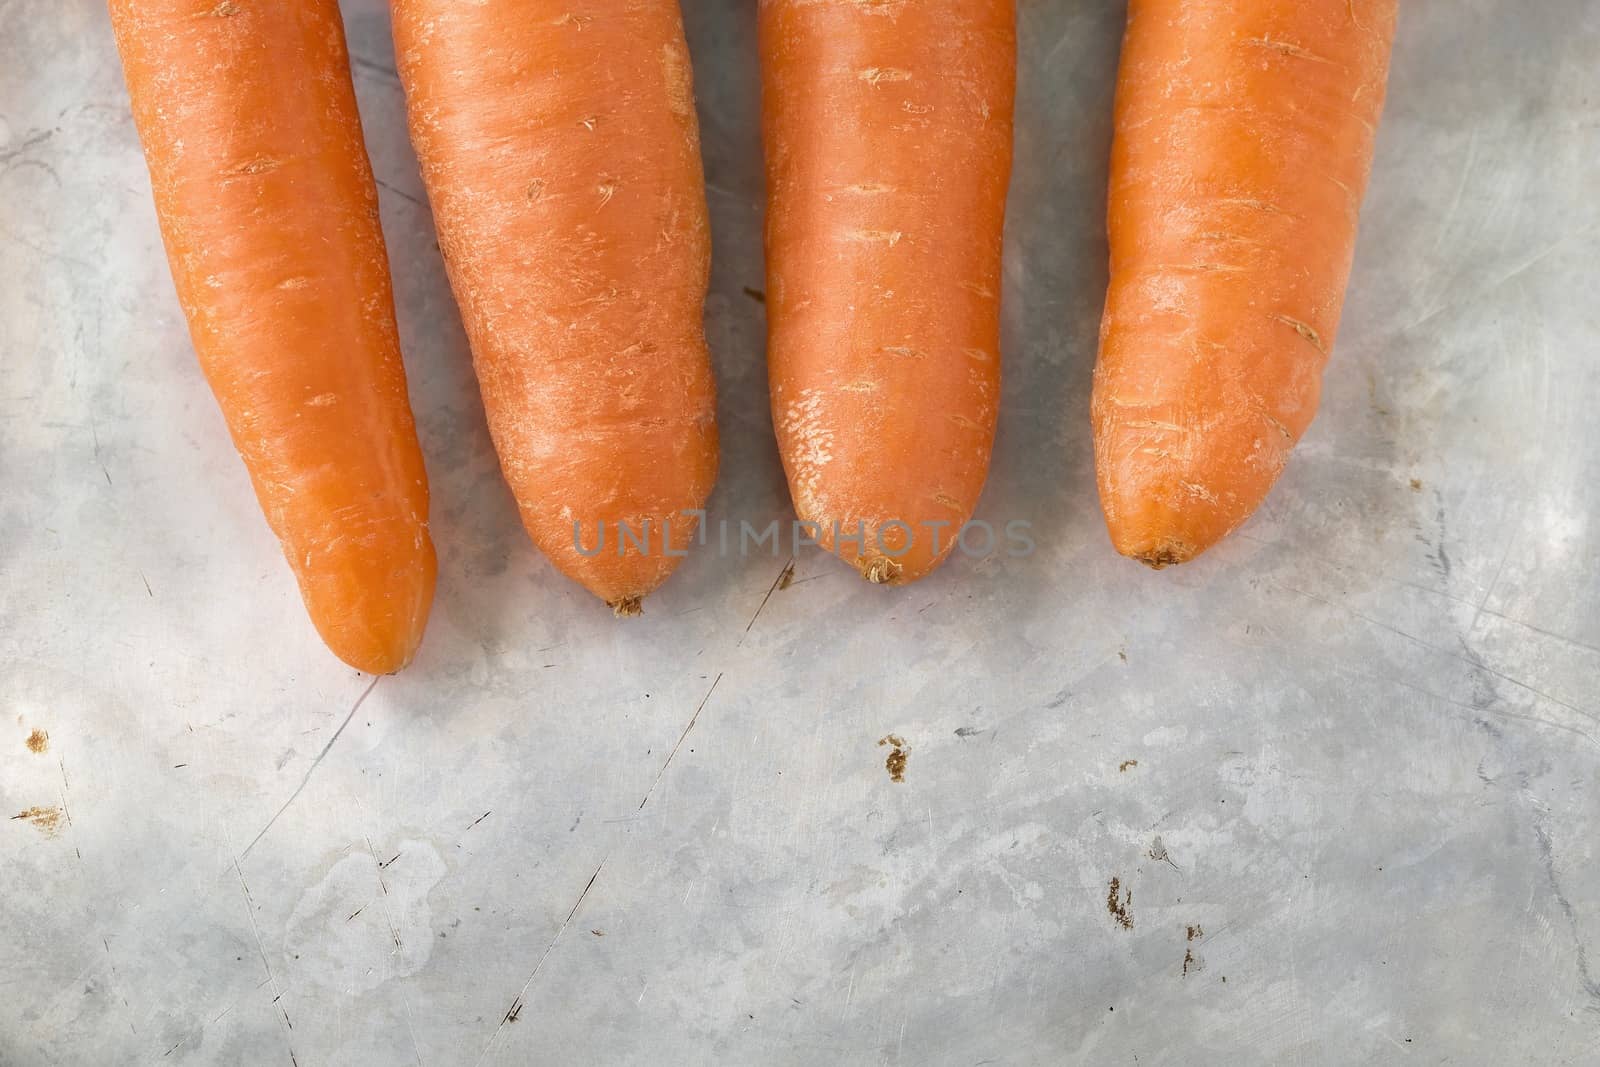 Carrots by Onigiristudio